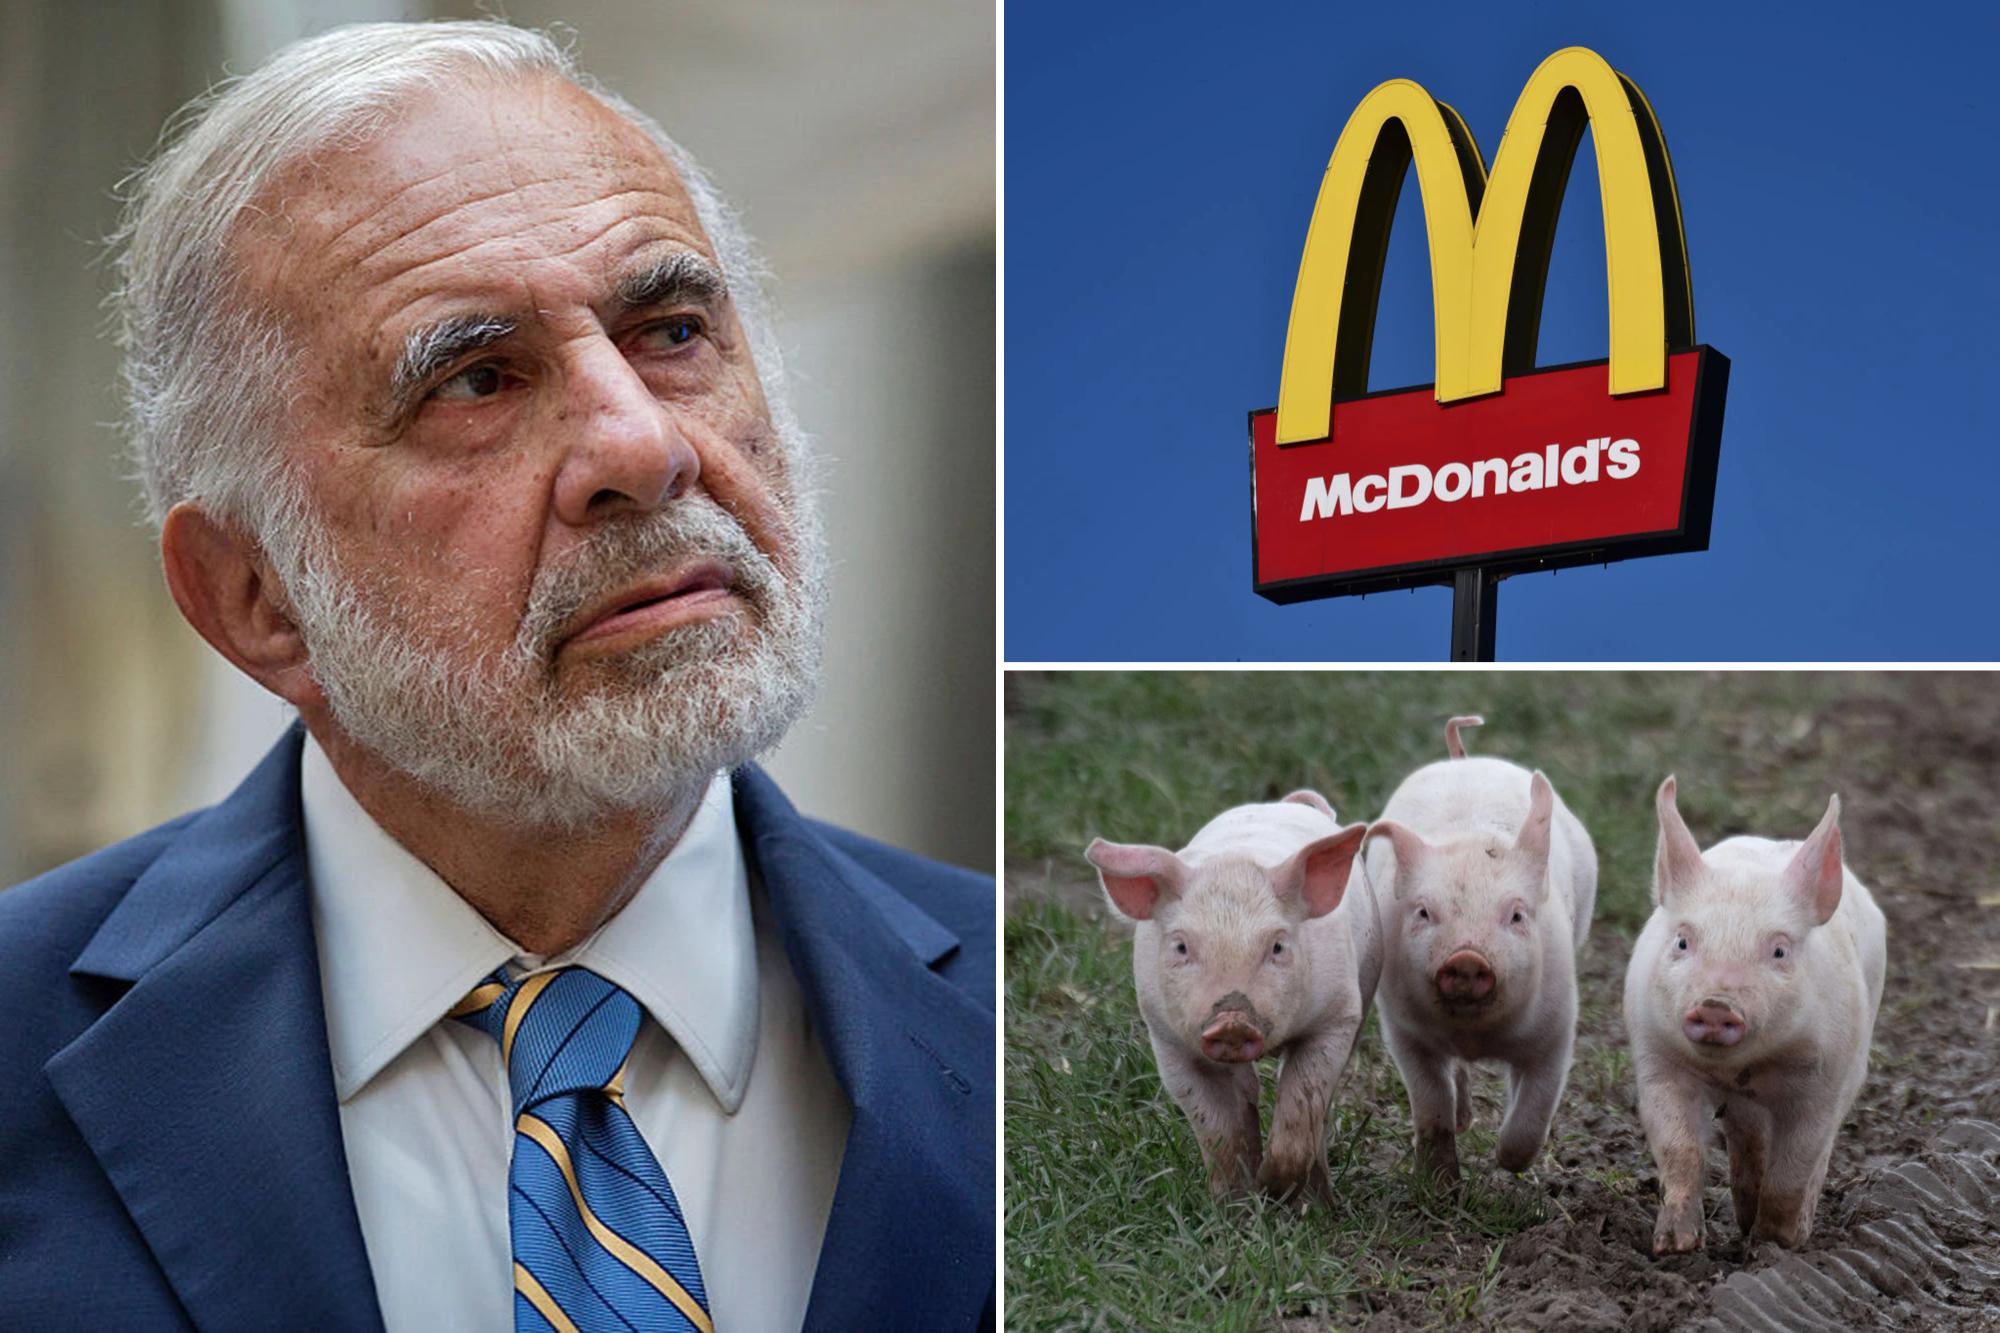 Over treatment of pigs, Billionaire Carl Icahn targets McDonald’s